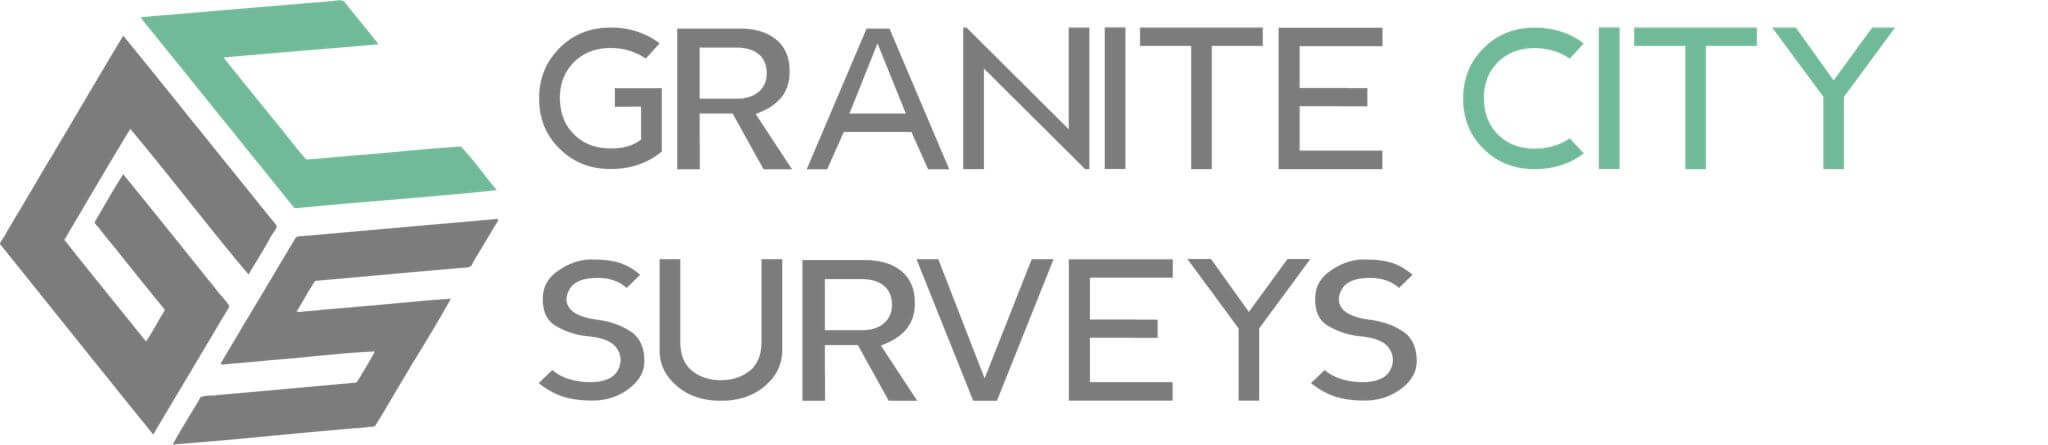 Granite City Surveys